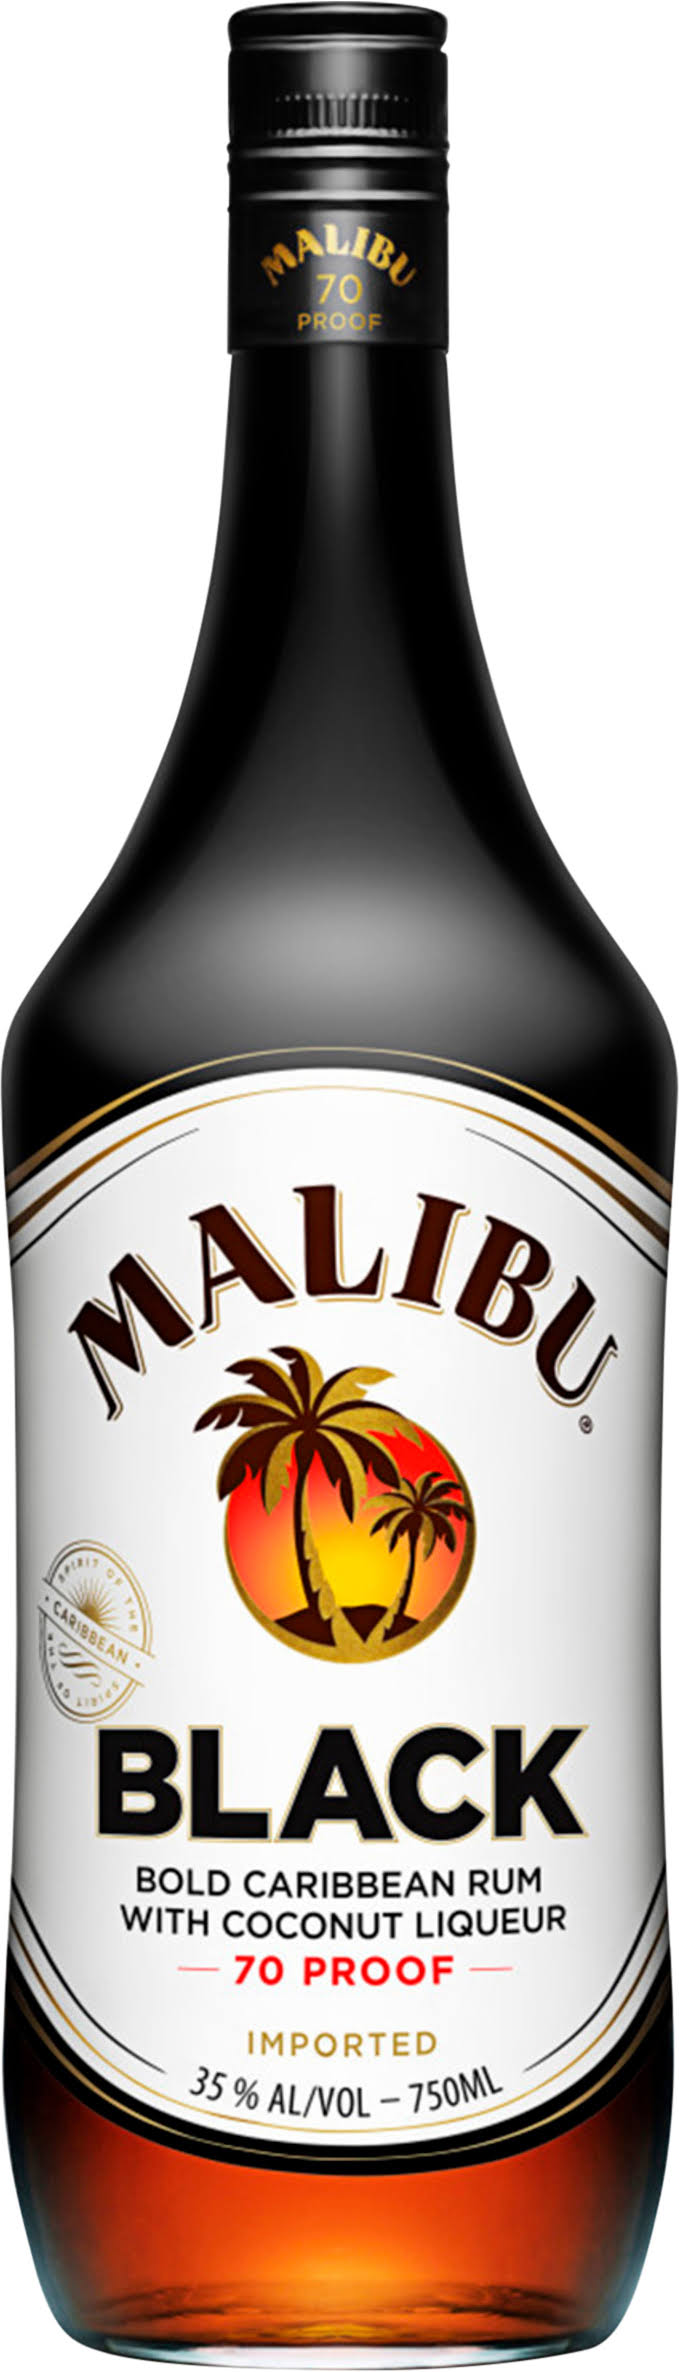 Malibu Black Rum - 750ml